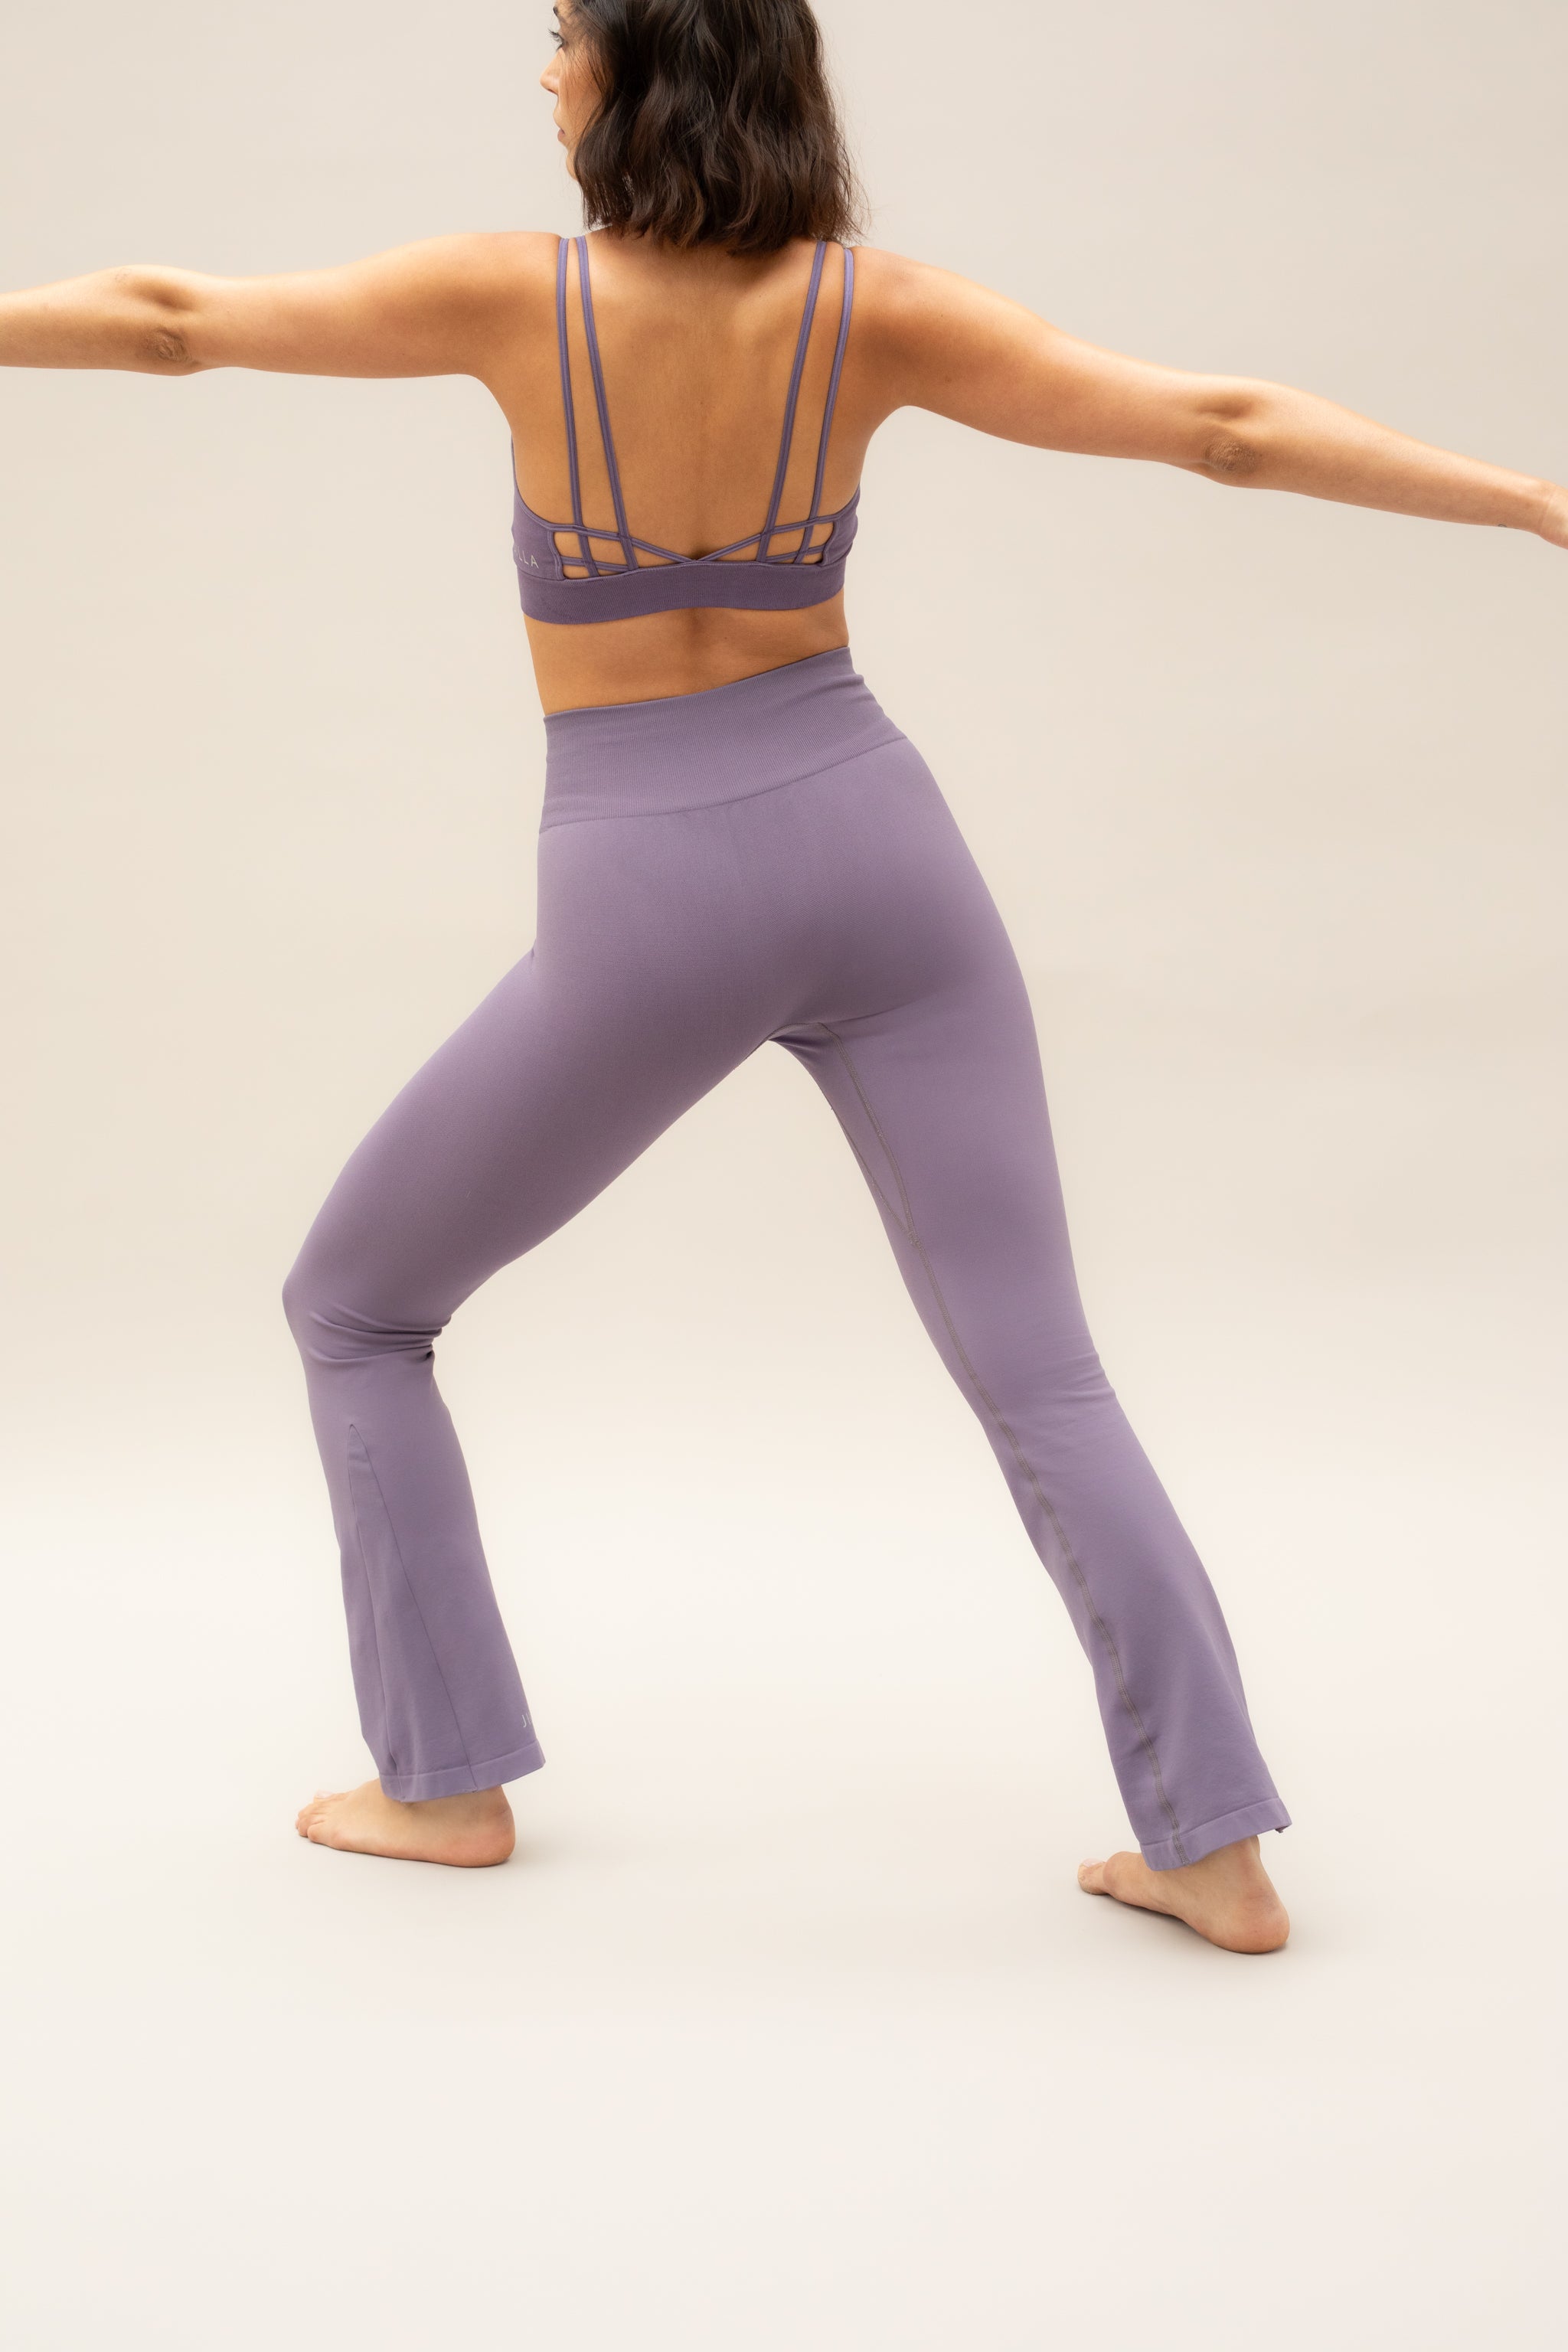 Purple flare leggings with purple supportive sports bra by sustainable women's activewear brand, Jilla. 